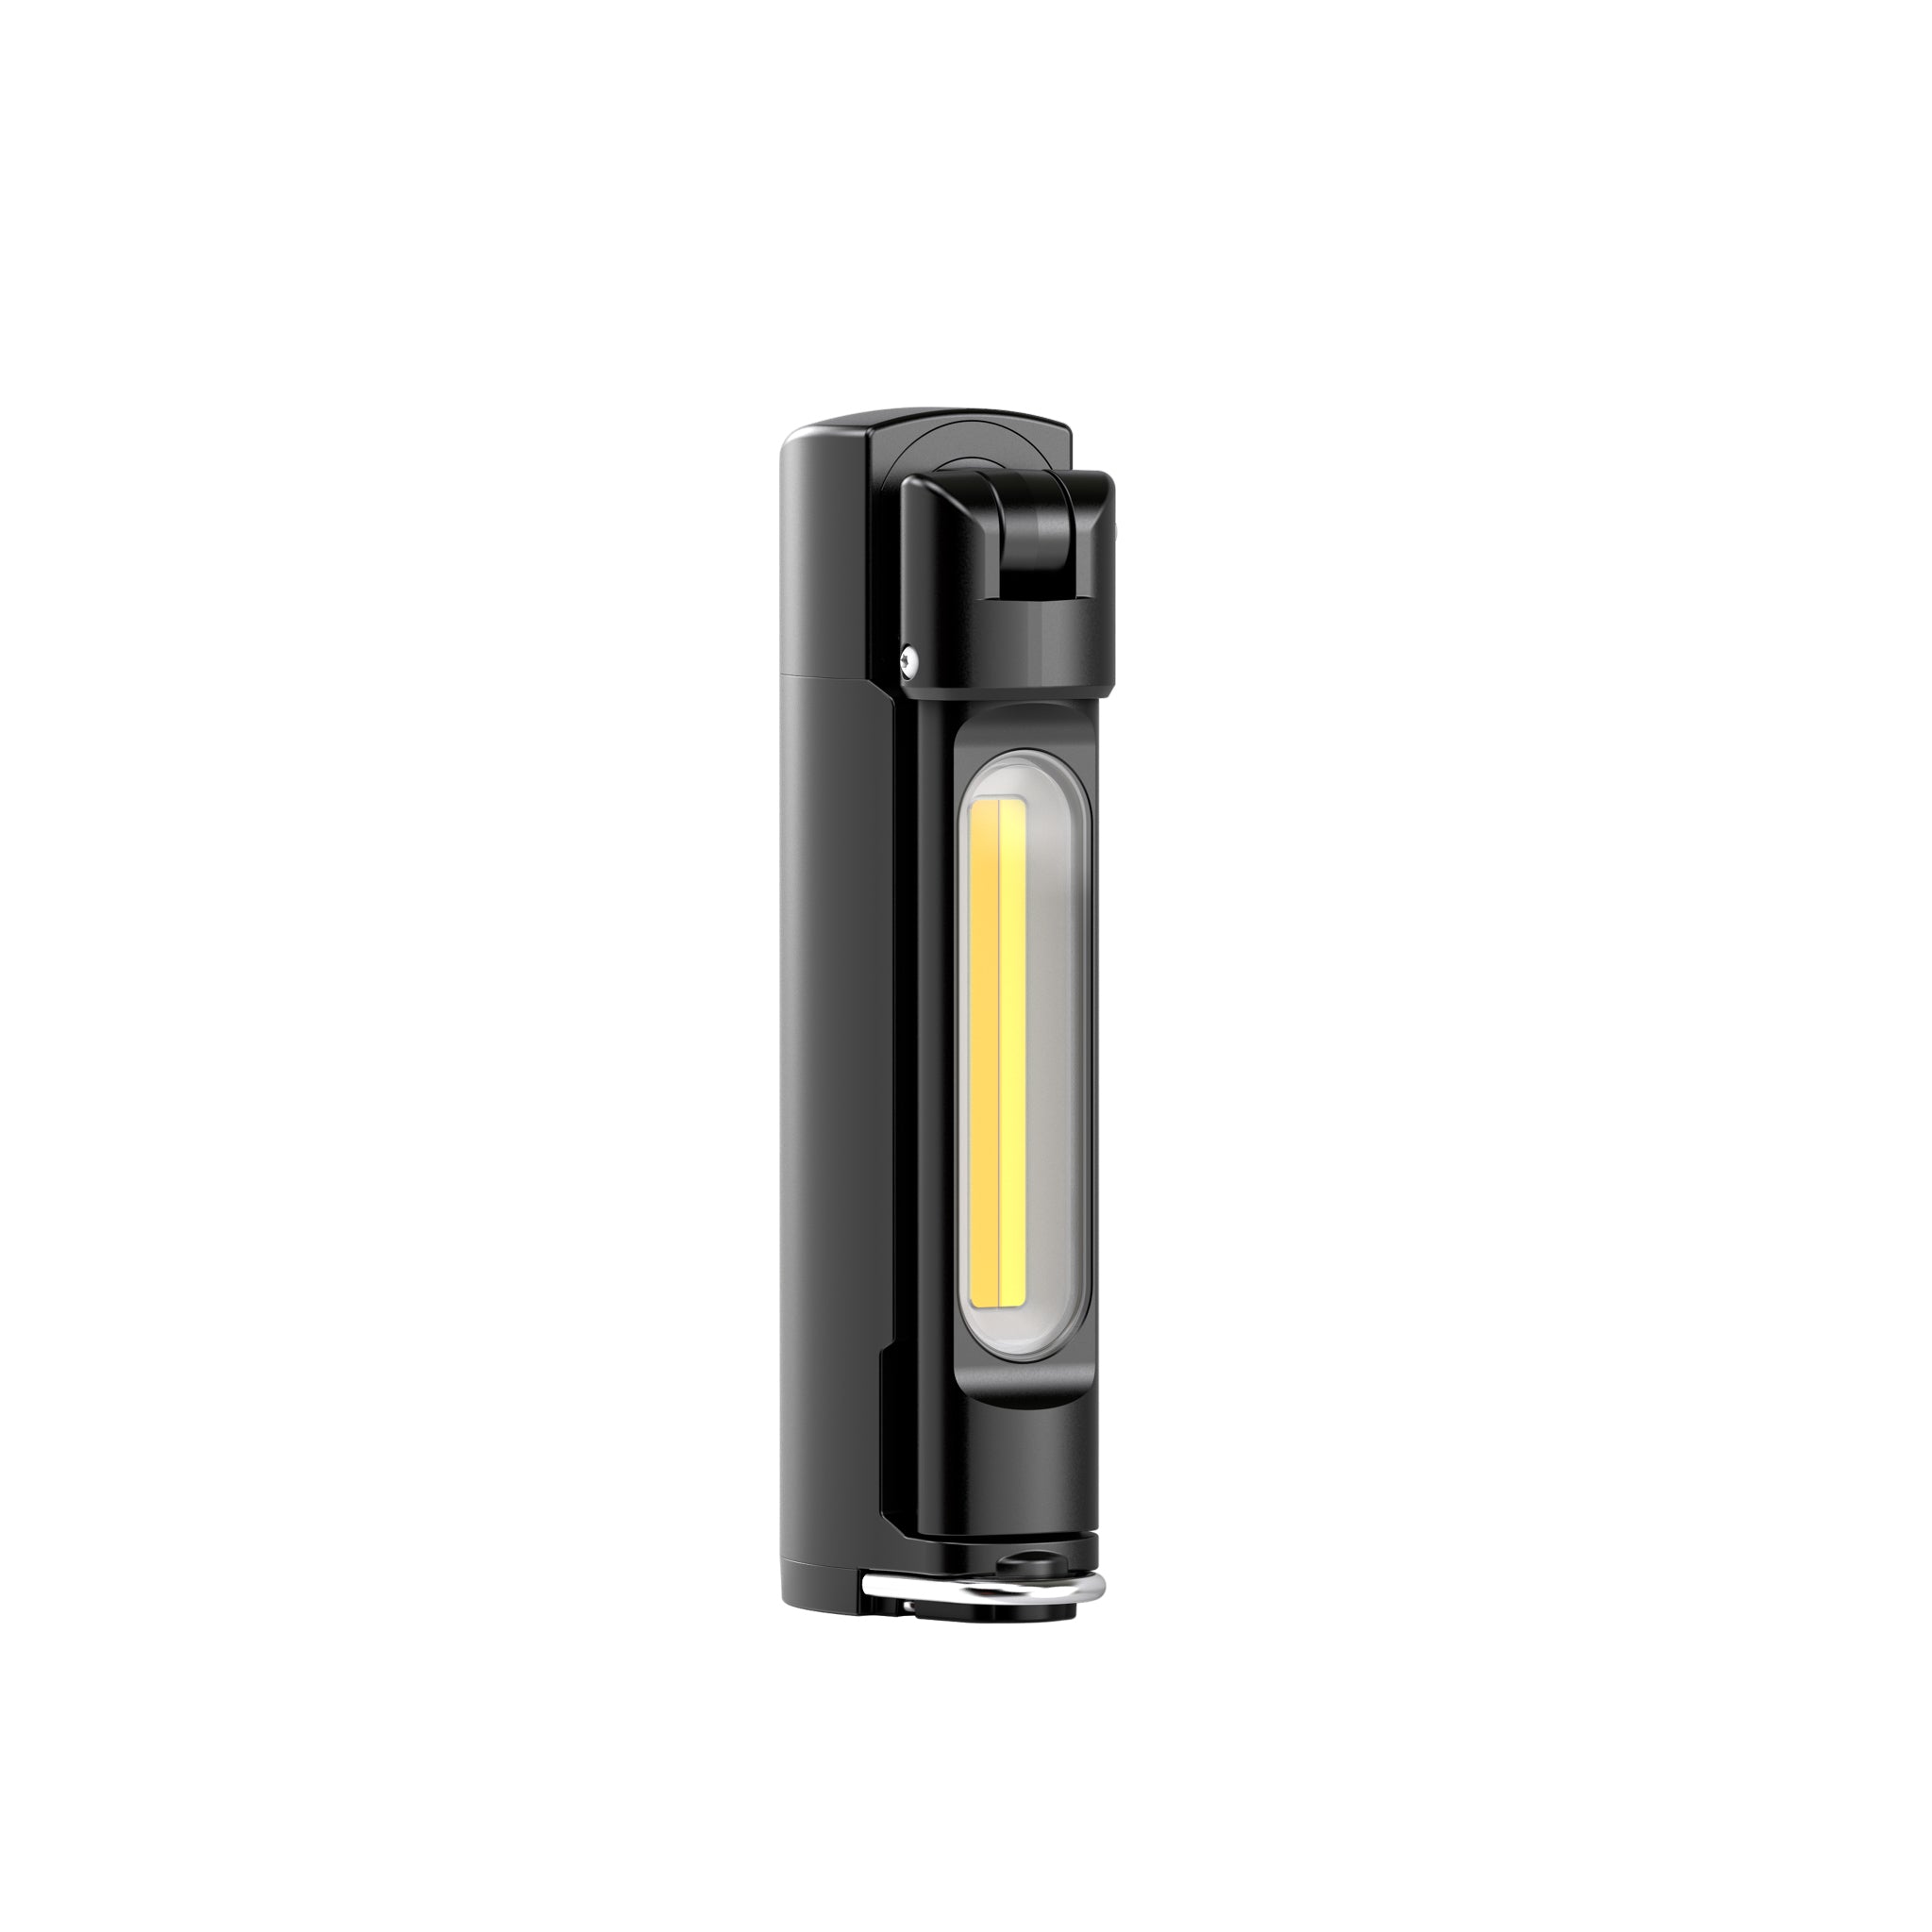 Ledlenser W7R Work Rechargeable Hands-Free Flashlight